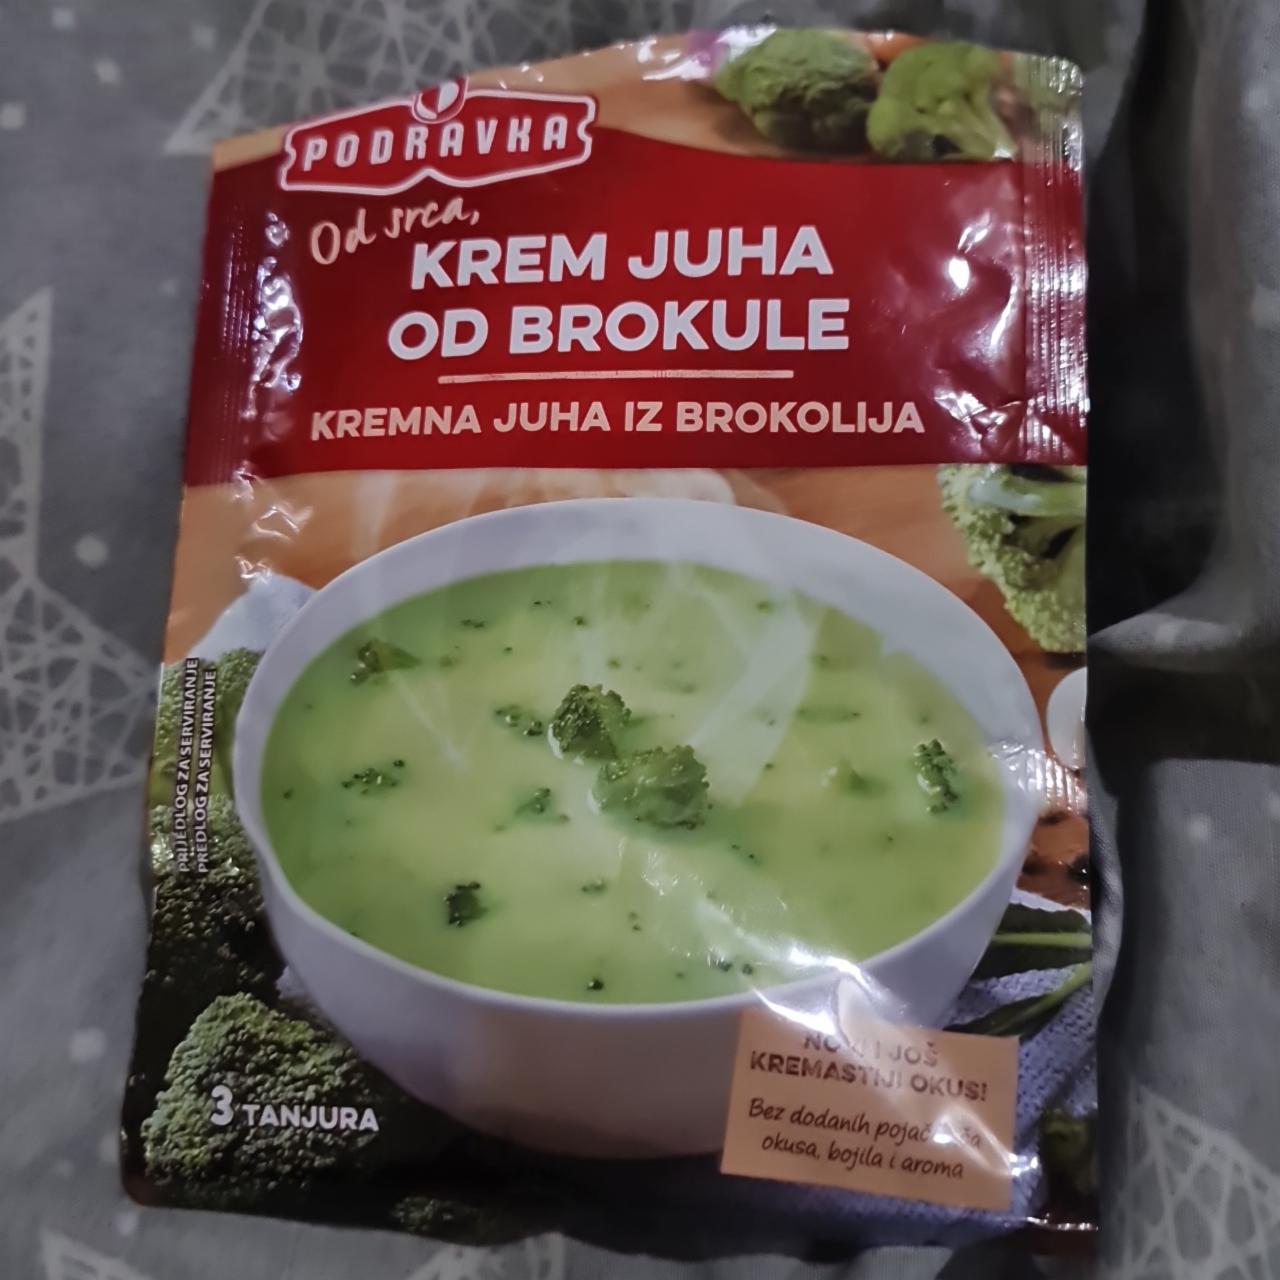 Фото - Крем-суп с брокколи Podravka